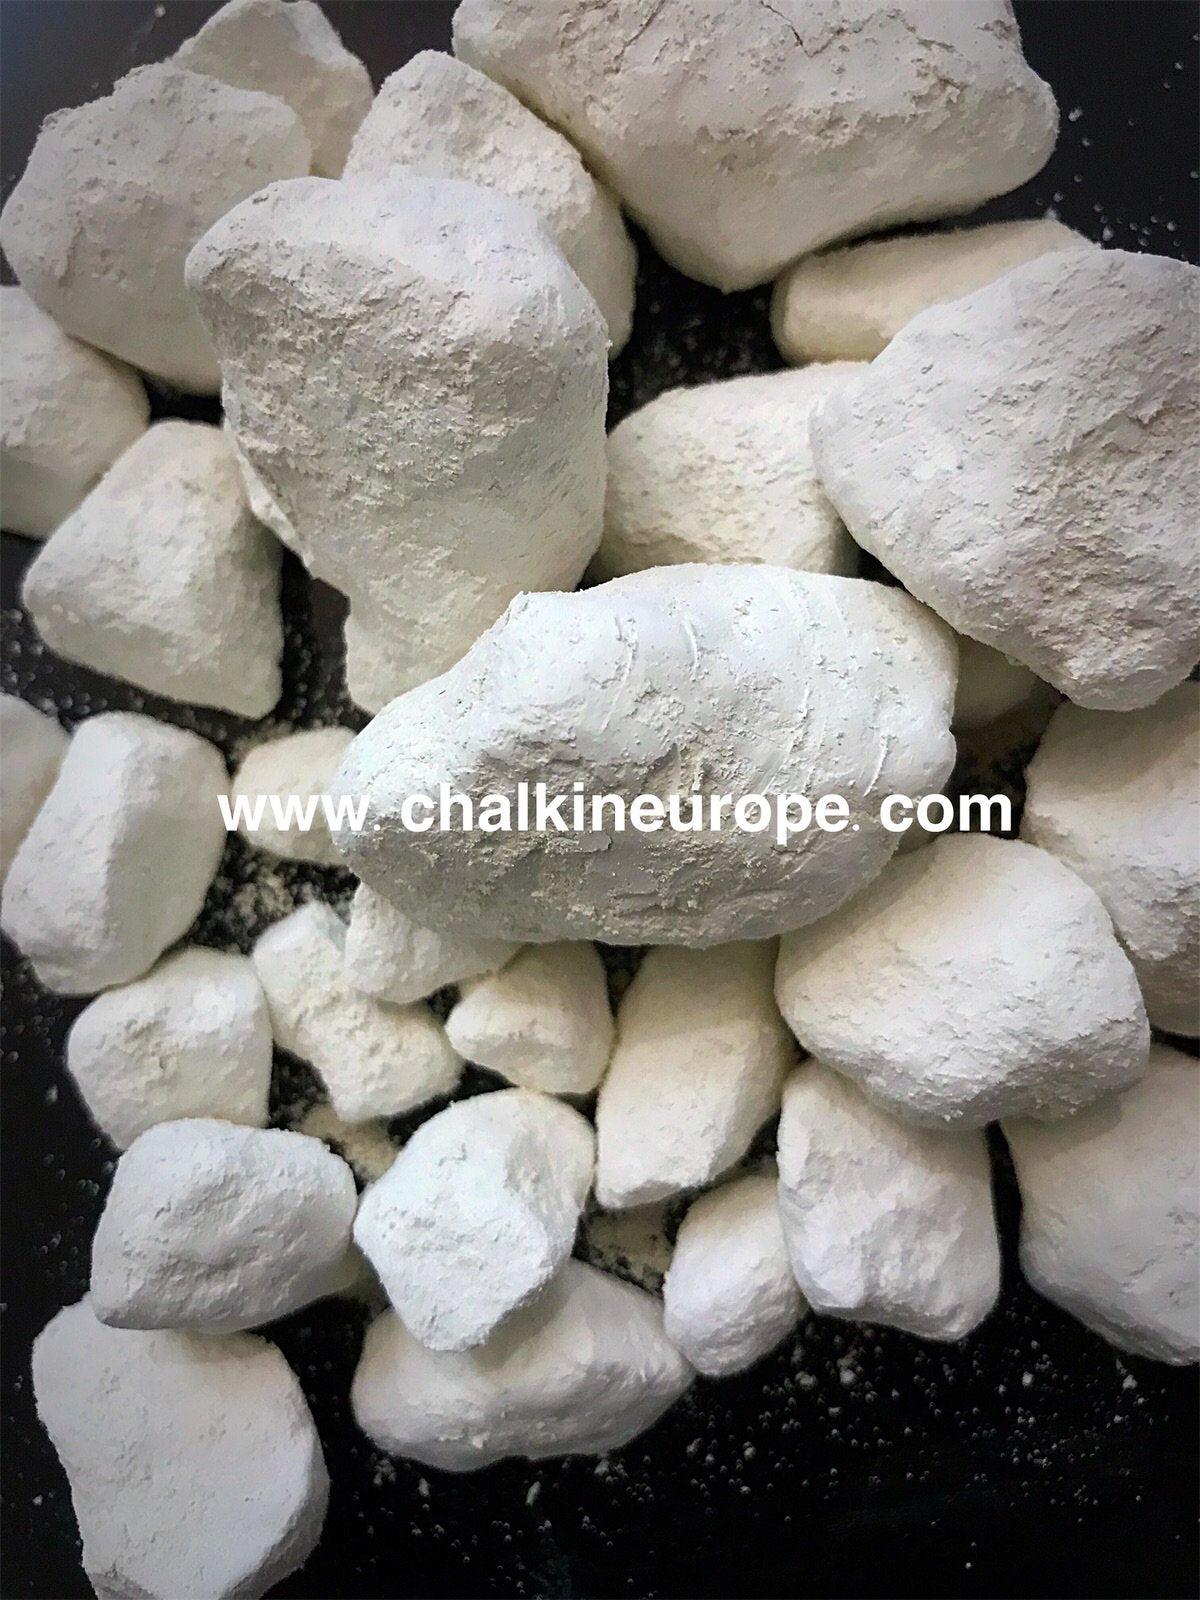 Eetbare Gerbil Chalk - Chalkineurope